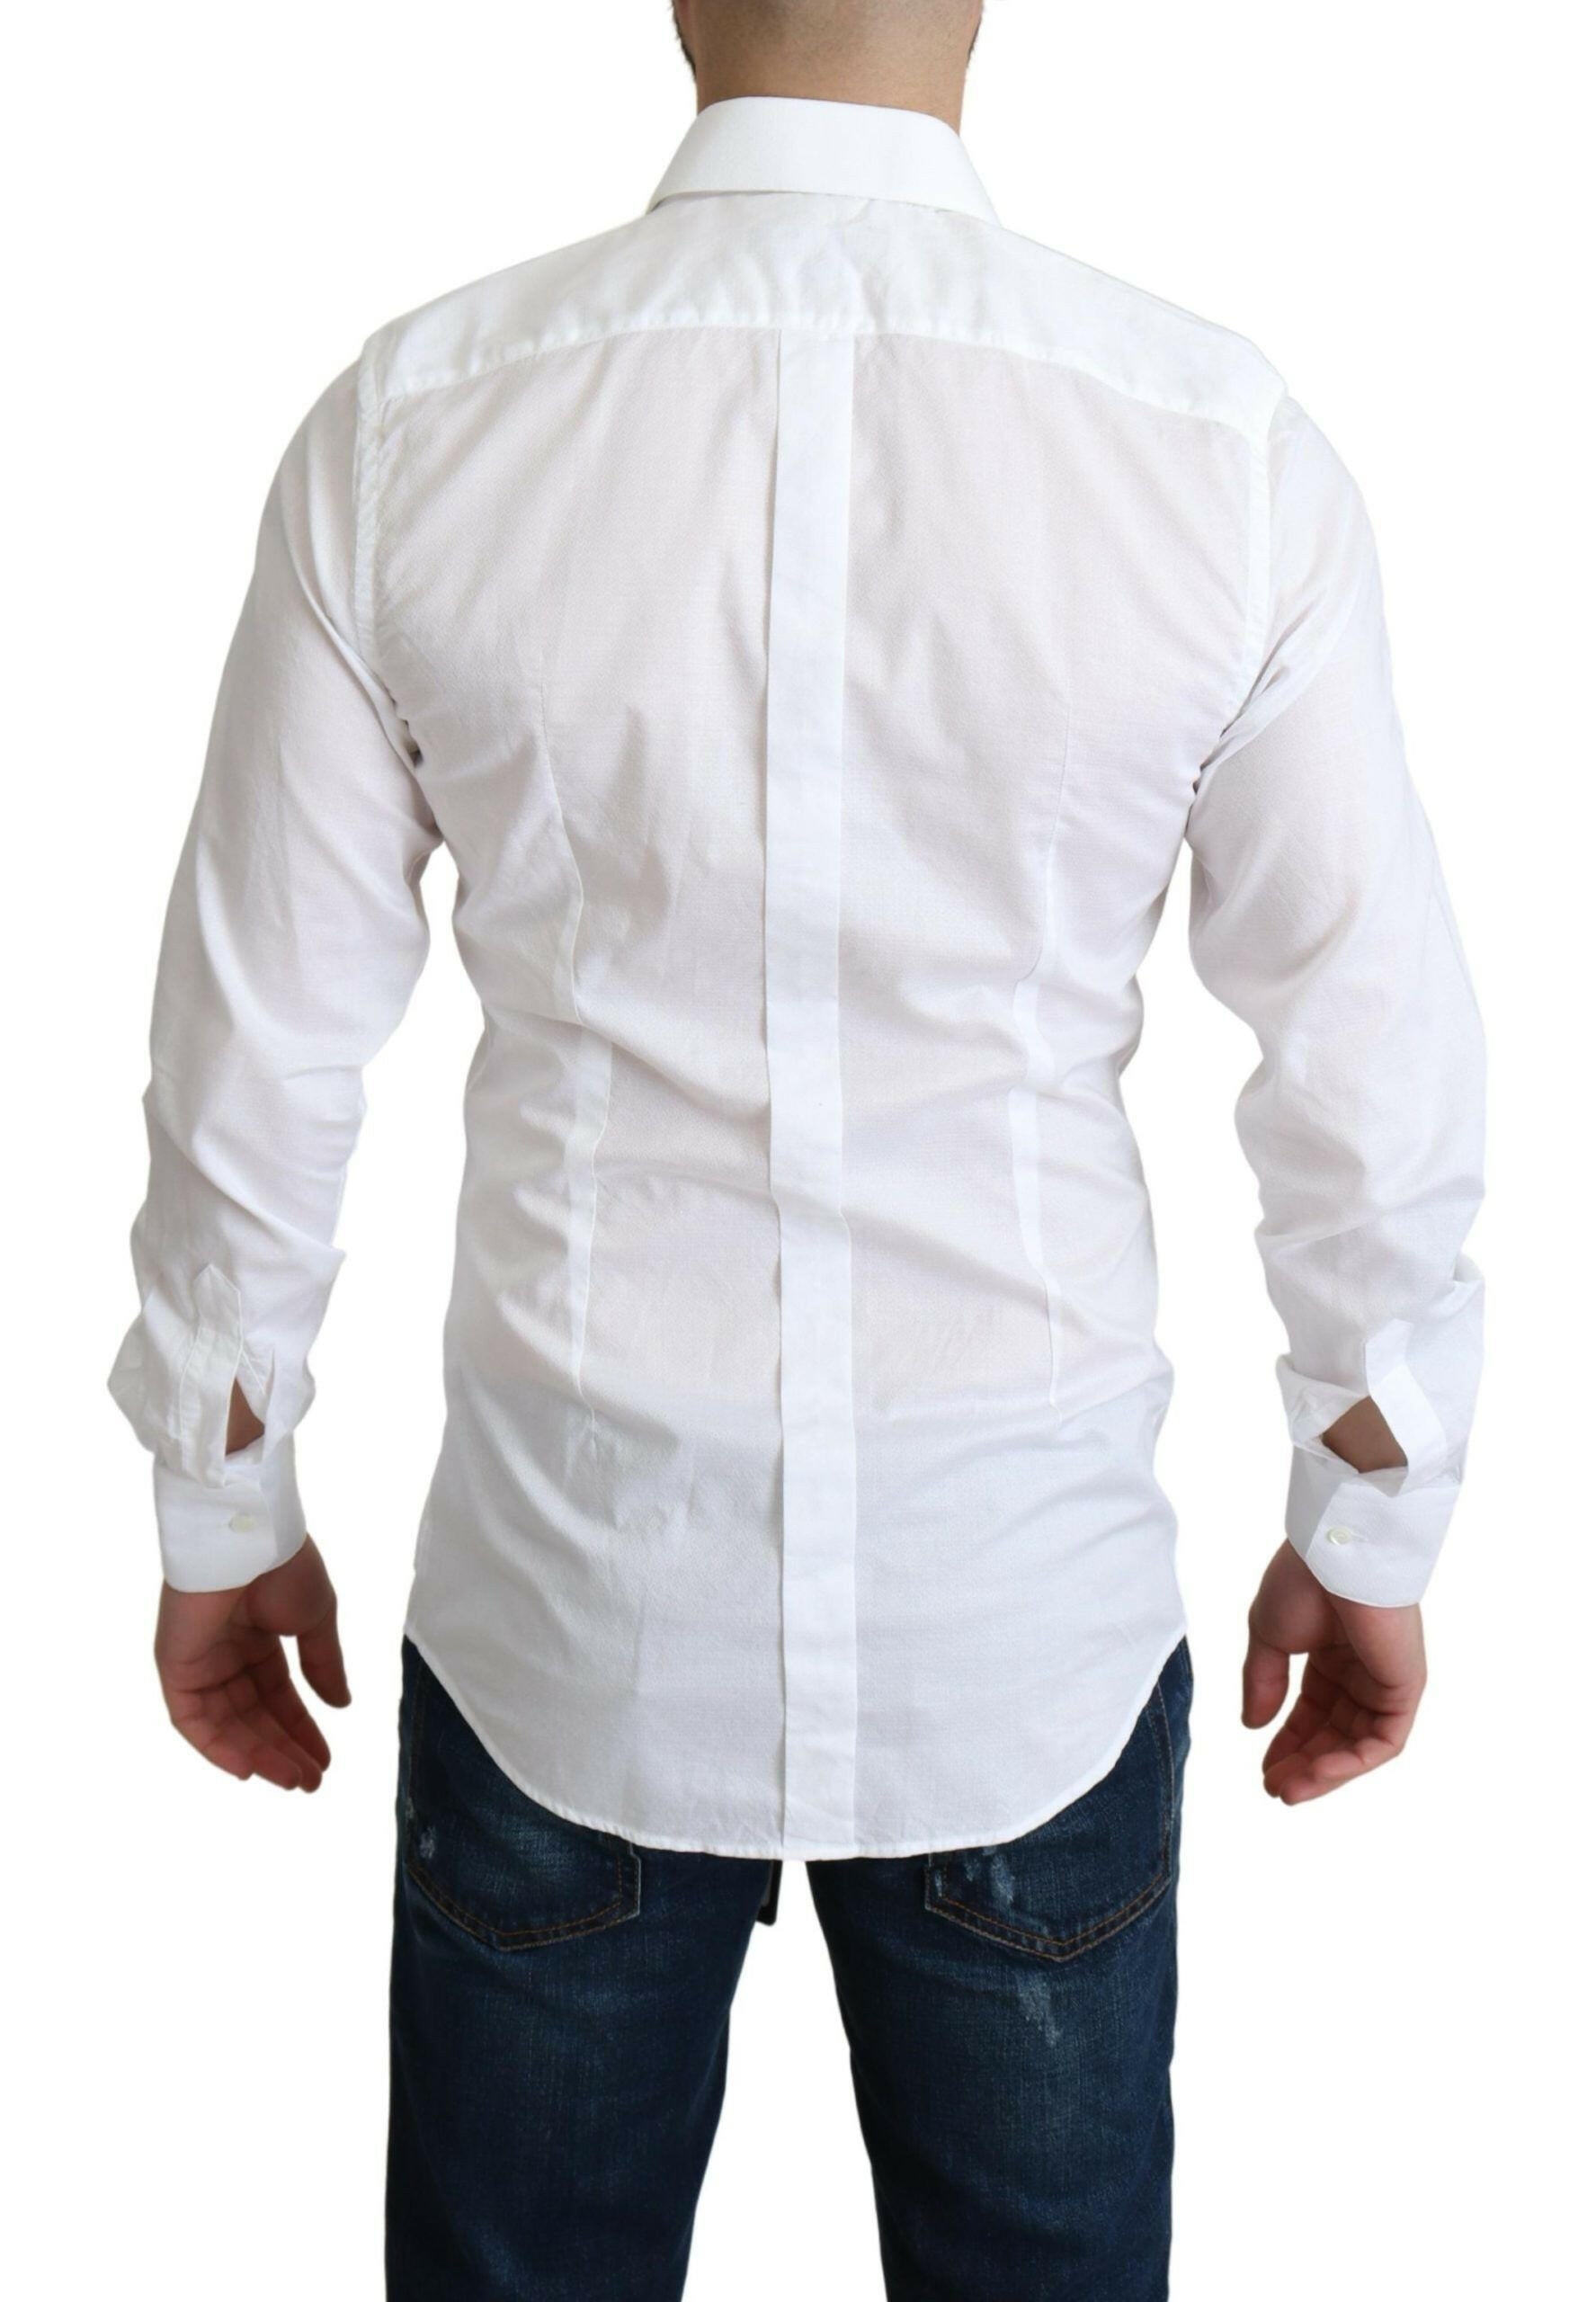 Dolce & Gabbana White Cotton Long Sleeves Formal Shirt - GENUINE AUTHENTIC BRAND LLC  